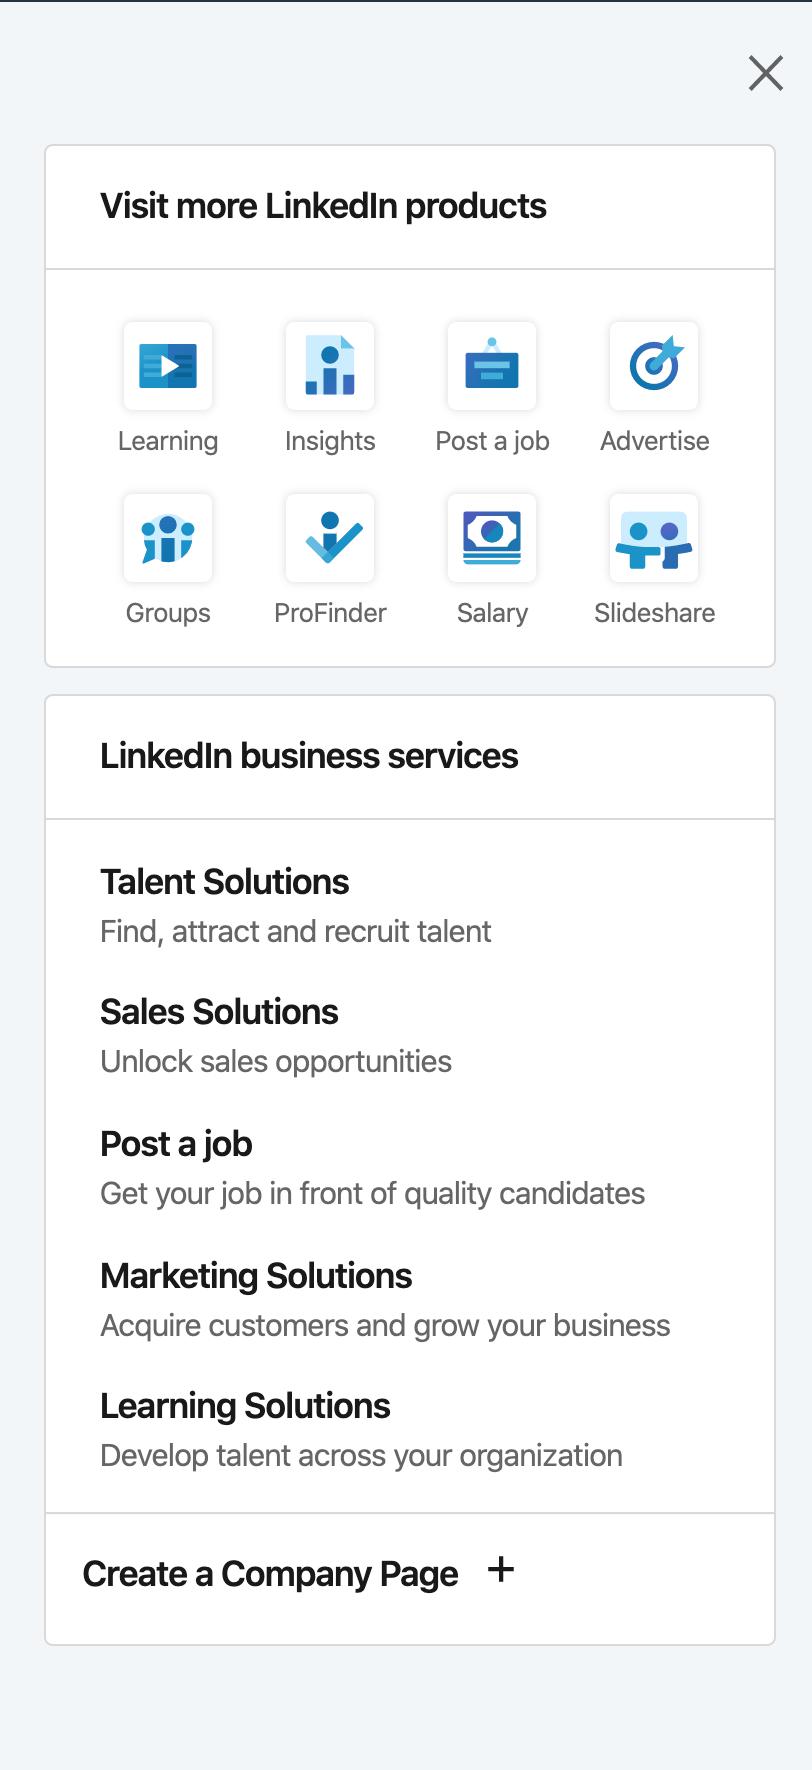 點擊LinkedIn〝ProFinder〞選項